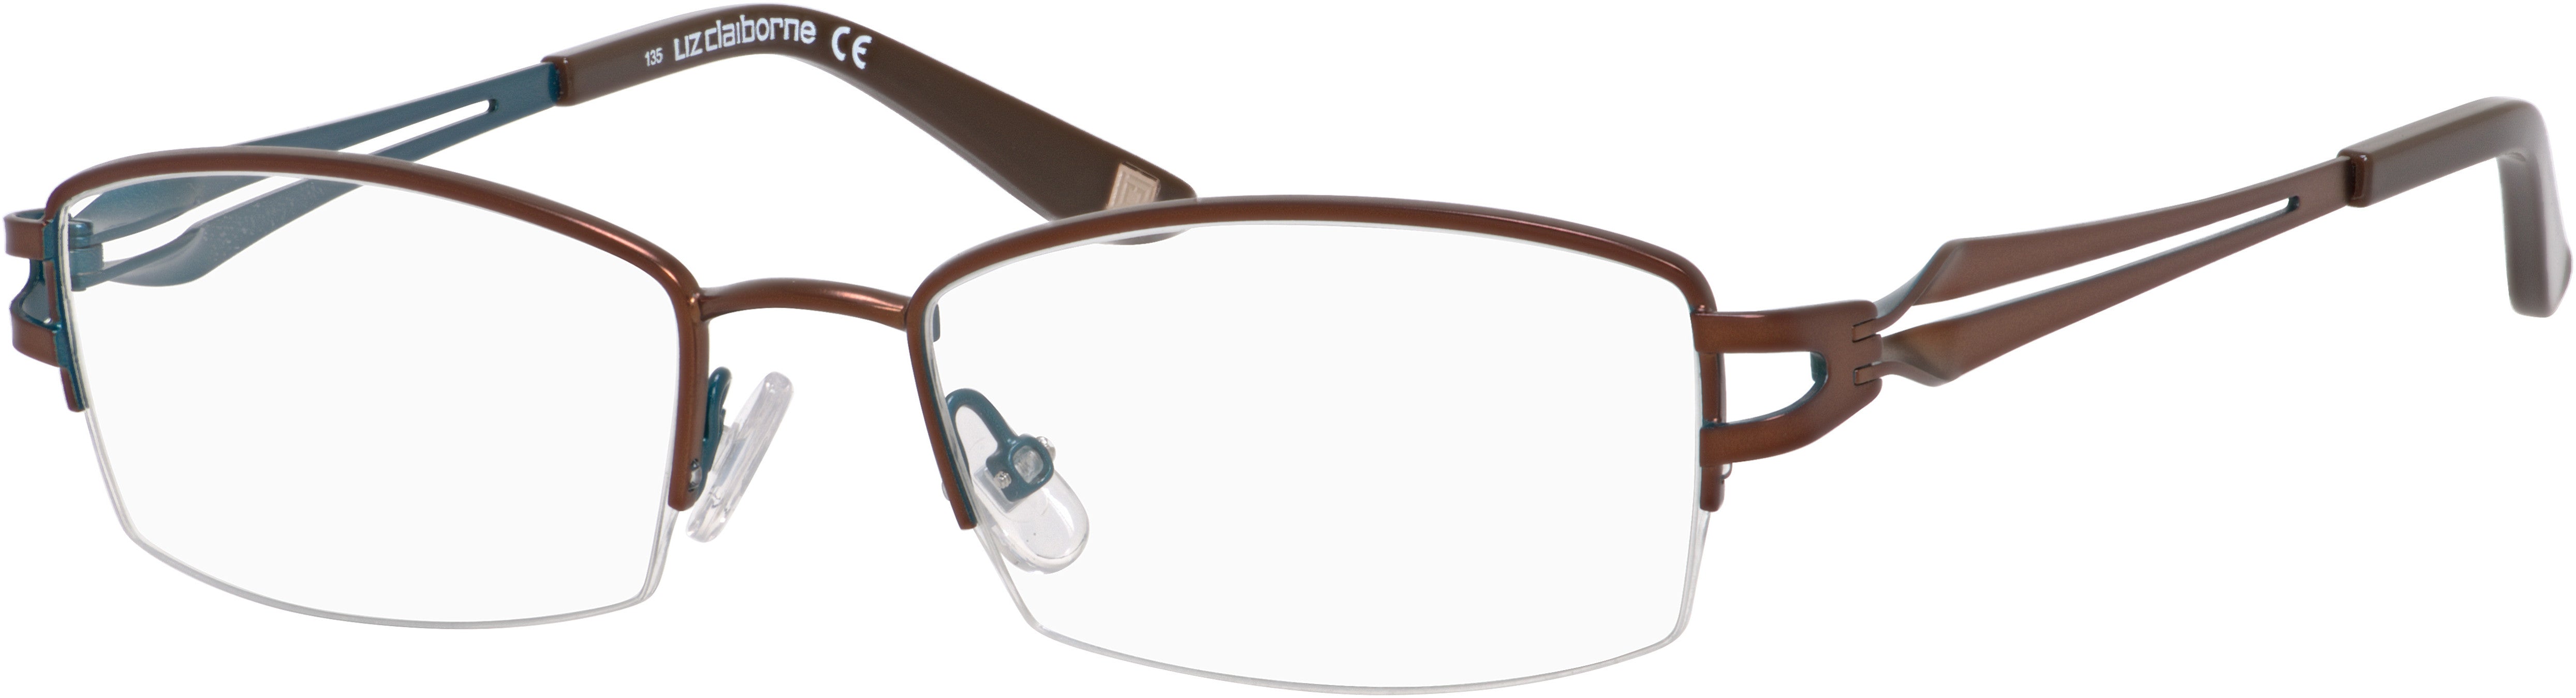  Liz Claiborne 432 Rectangular Eyeglasses 0JBP-0JBP  Brown (00 Demo Lens)